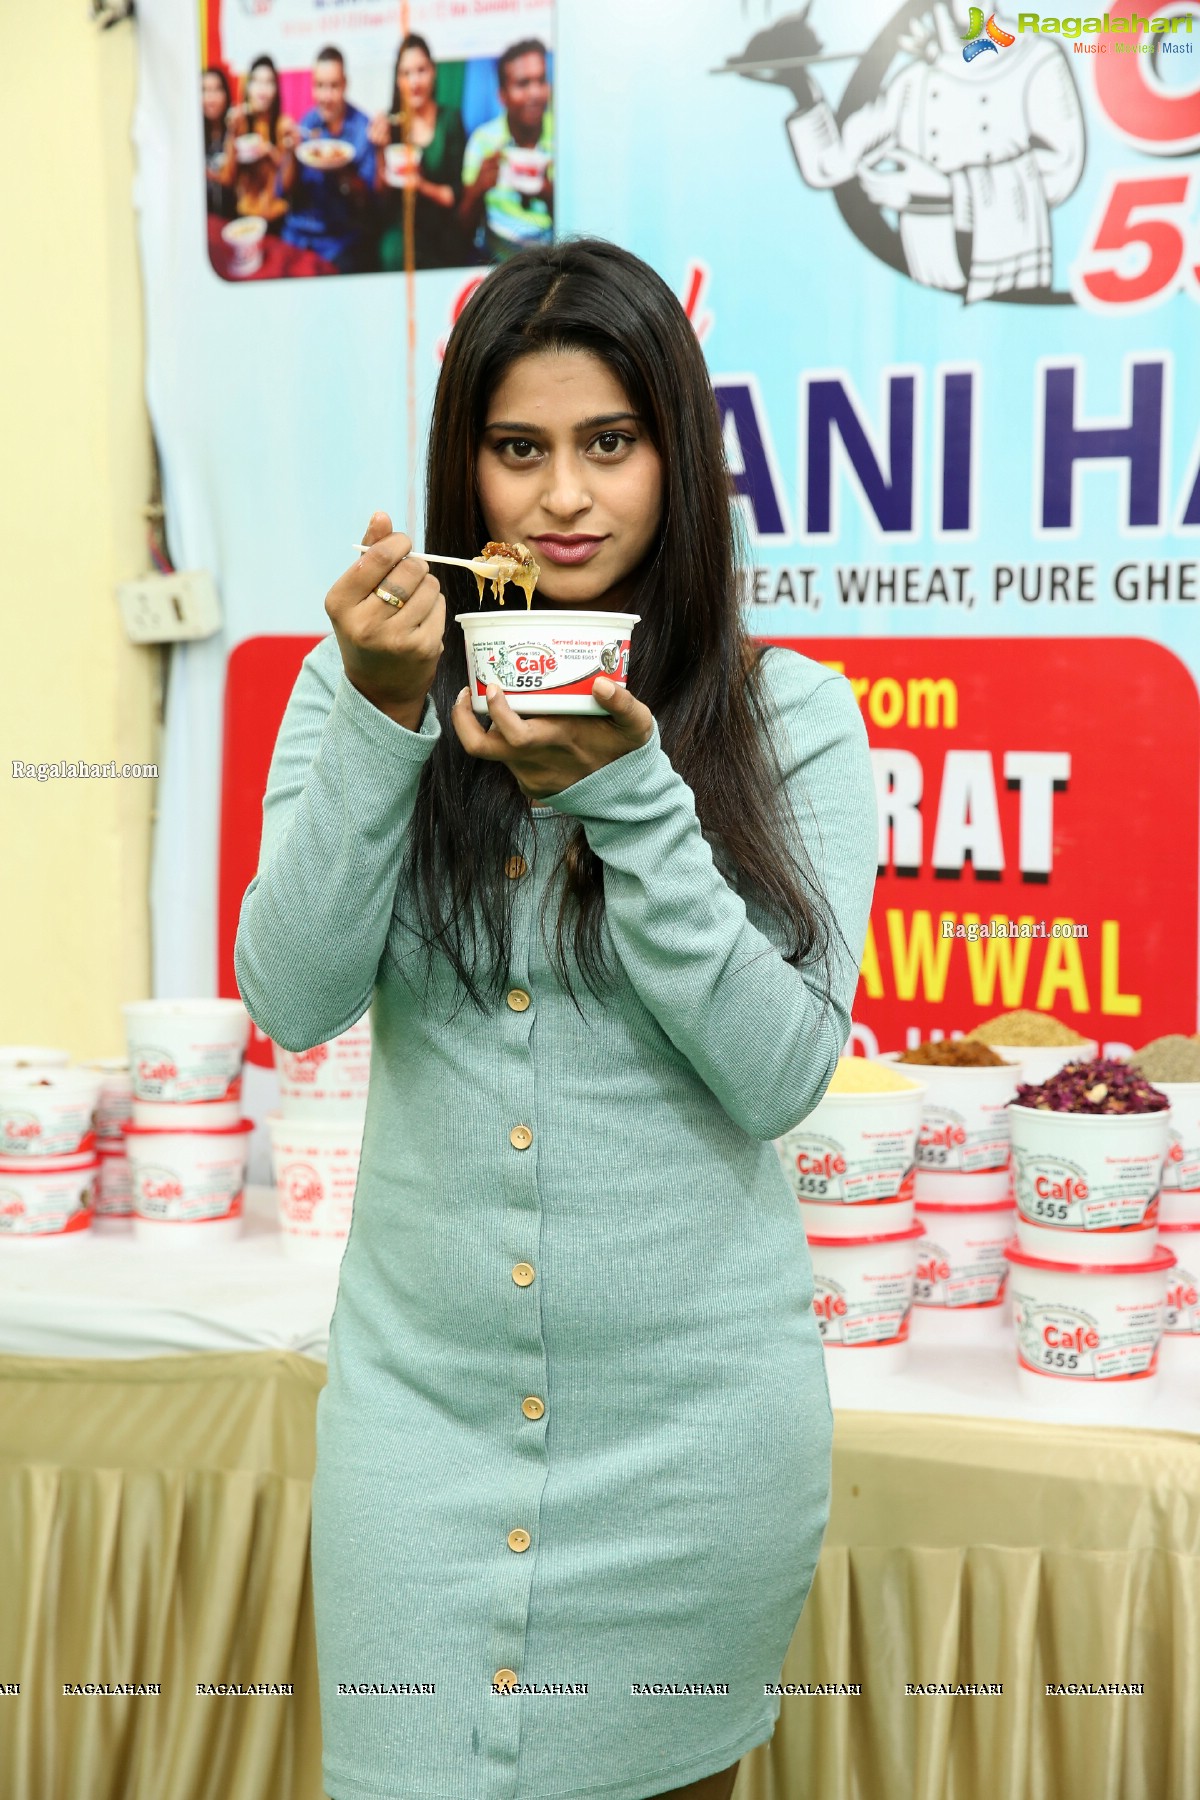 Cafe 555, Famous Haleem Maker of Hyderabad, Introduces Its Haleem